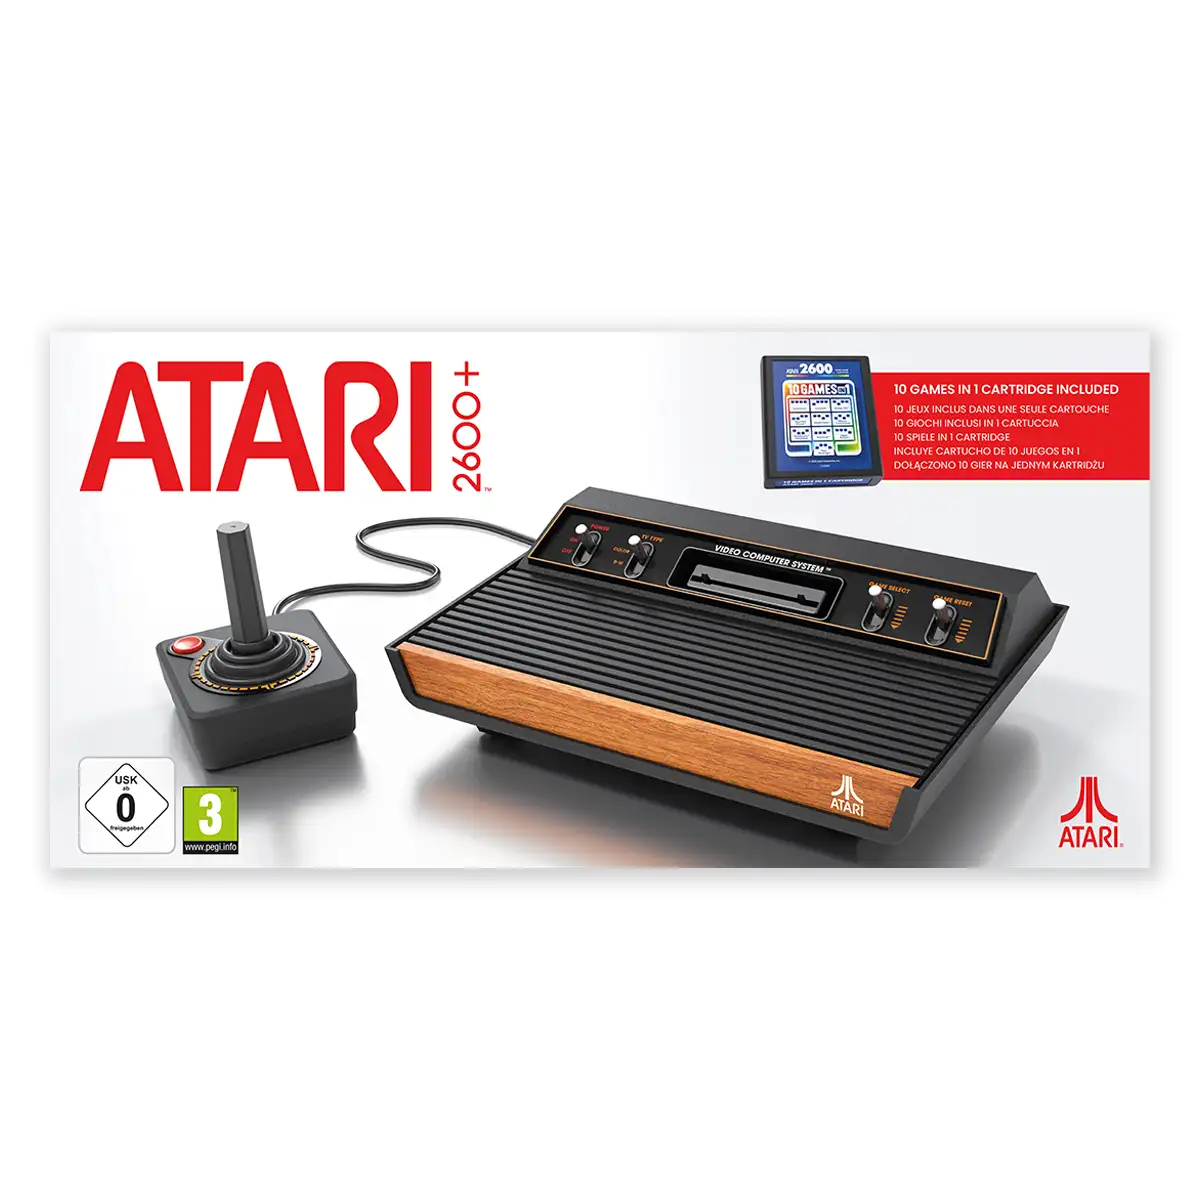 Atari 2600+ Image 2